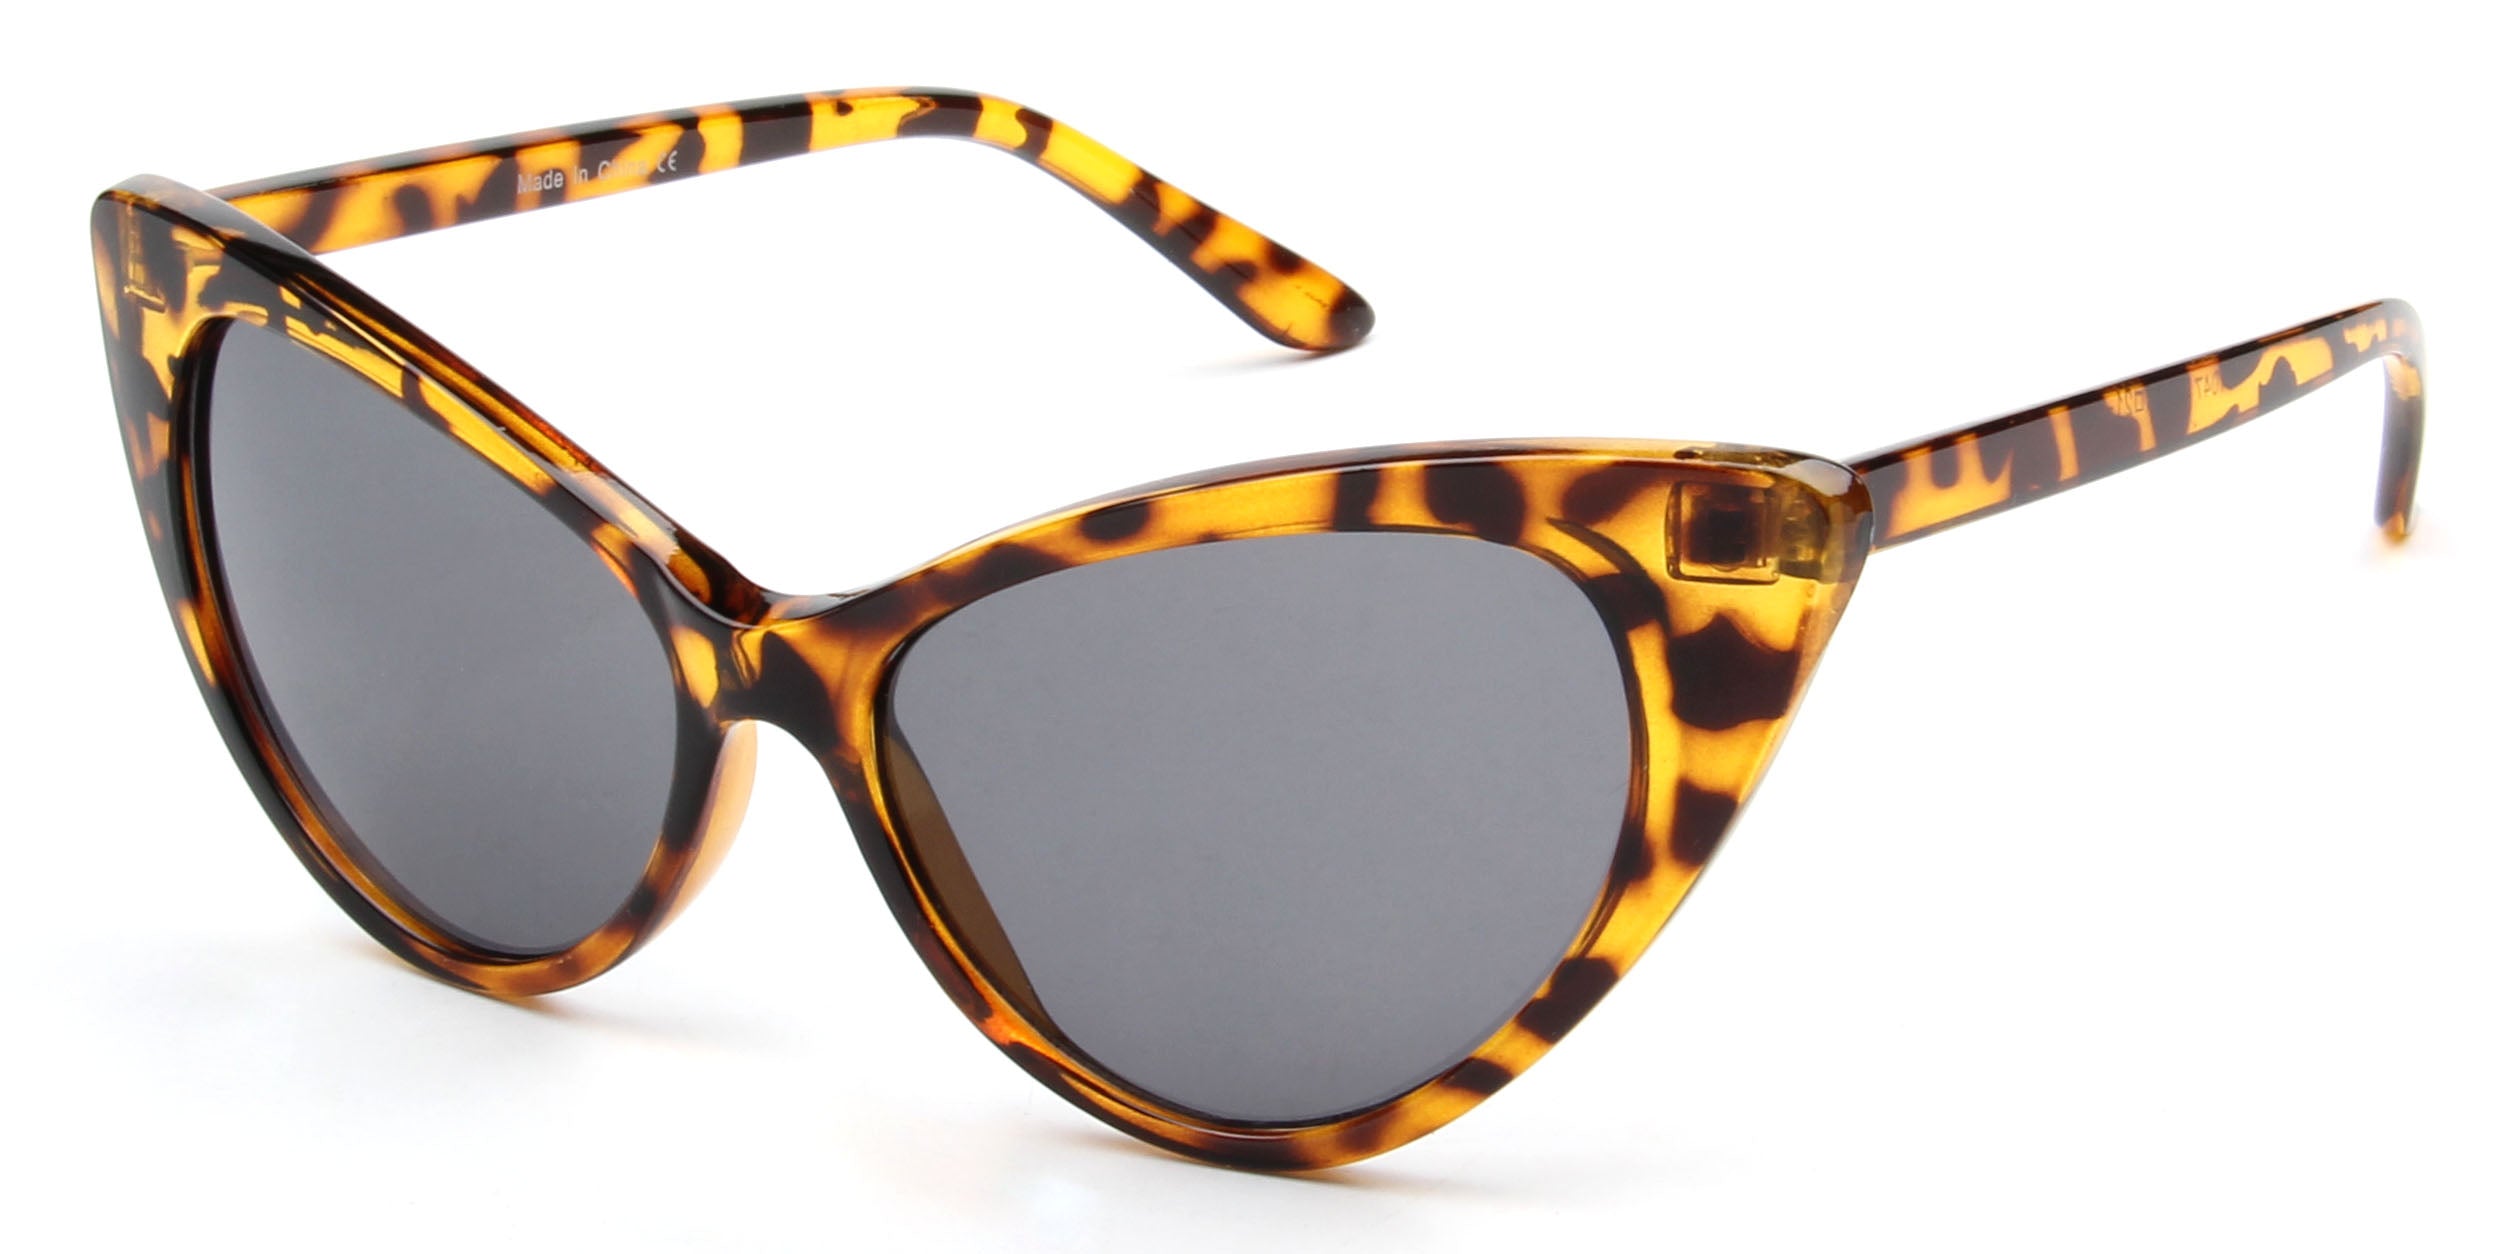 S1047 - Women Retro VINTAGE High Pointed Cat Eye Sunglasses Tortoise / Smoke